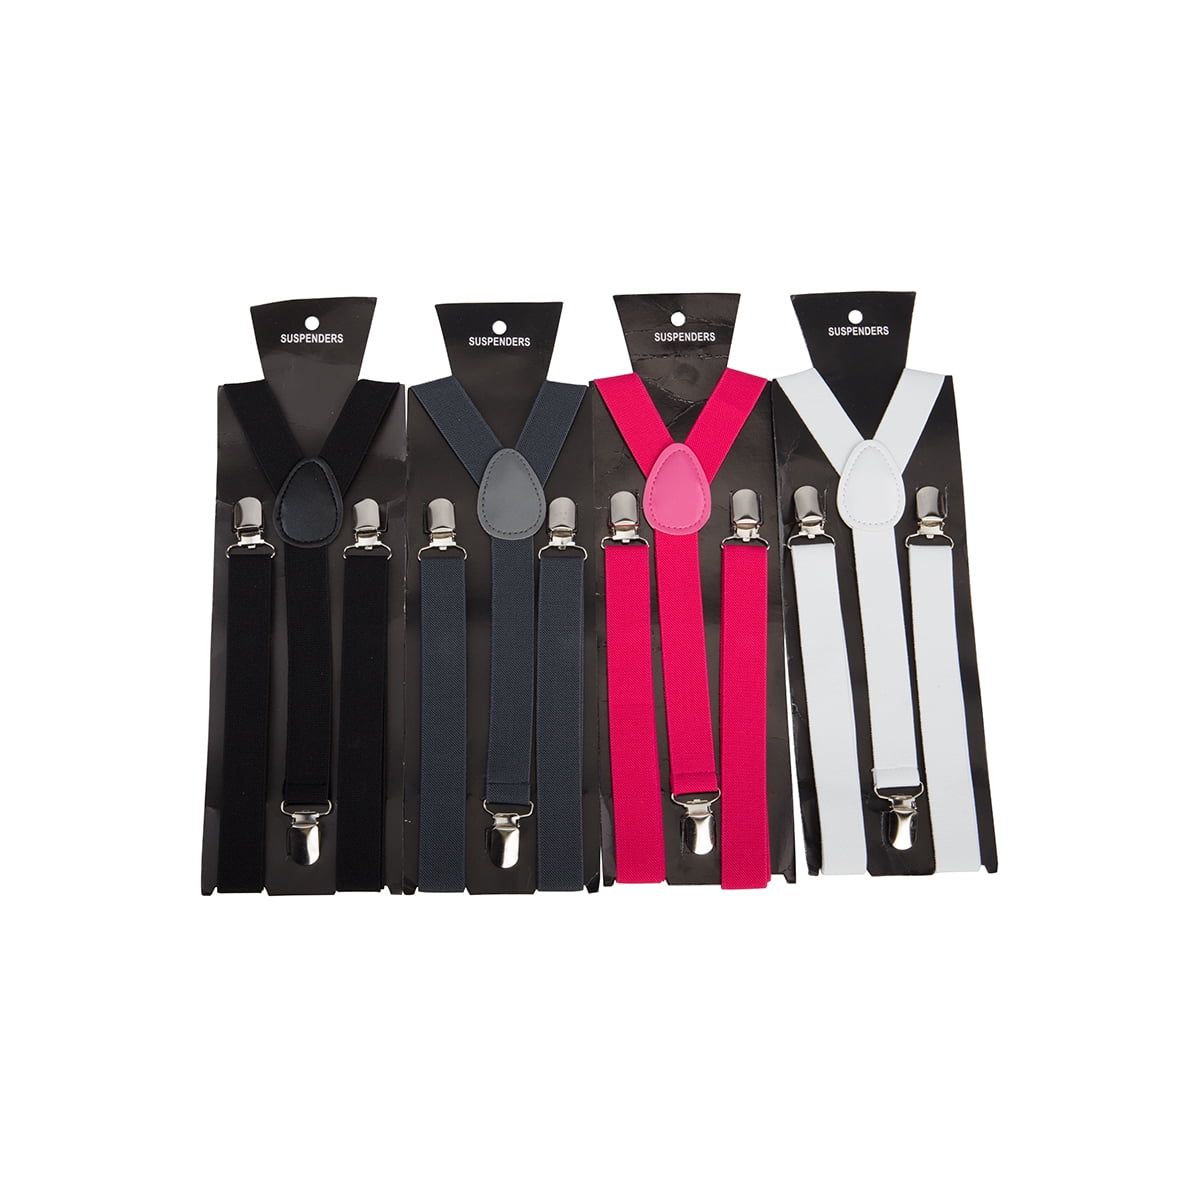 Nvzi trilece Suspenders for Men Women Adjustable Y Shape Suspender with Heavy  Duty Clips 